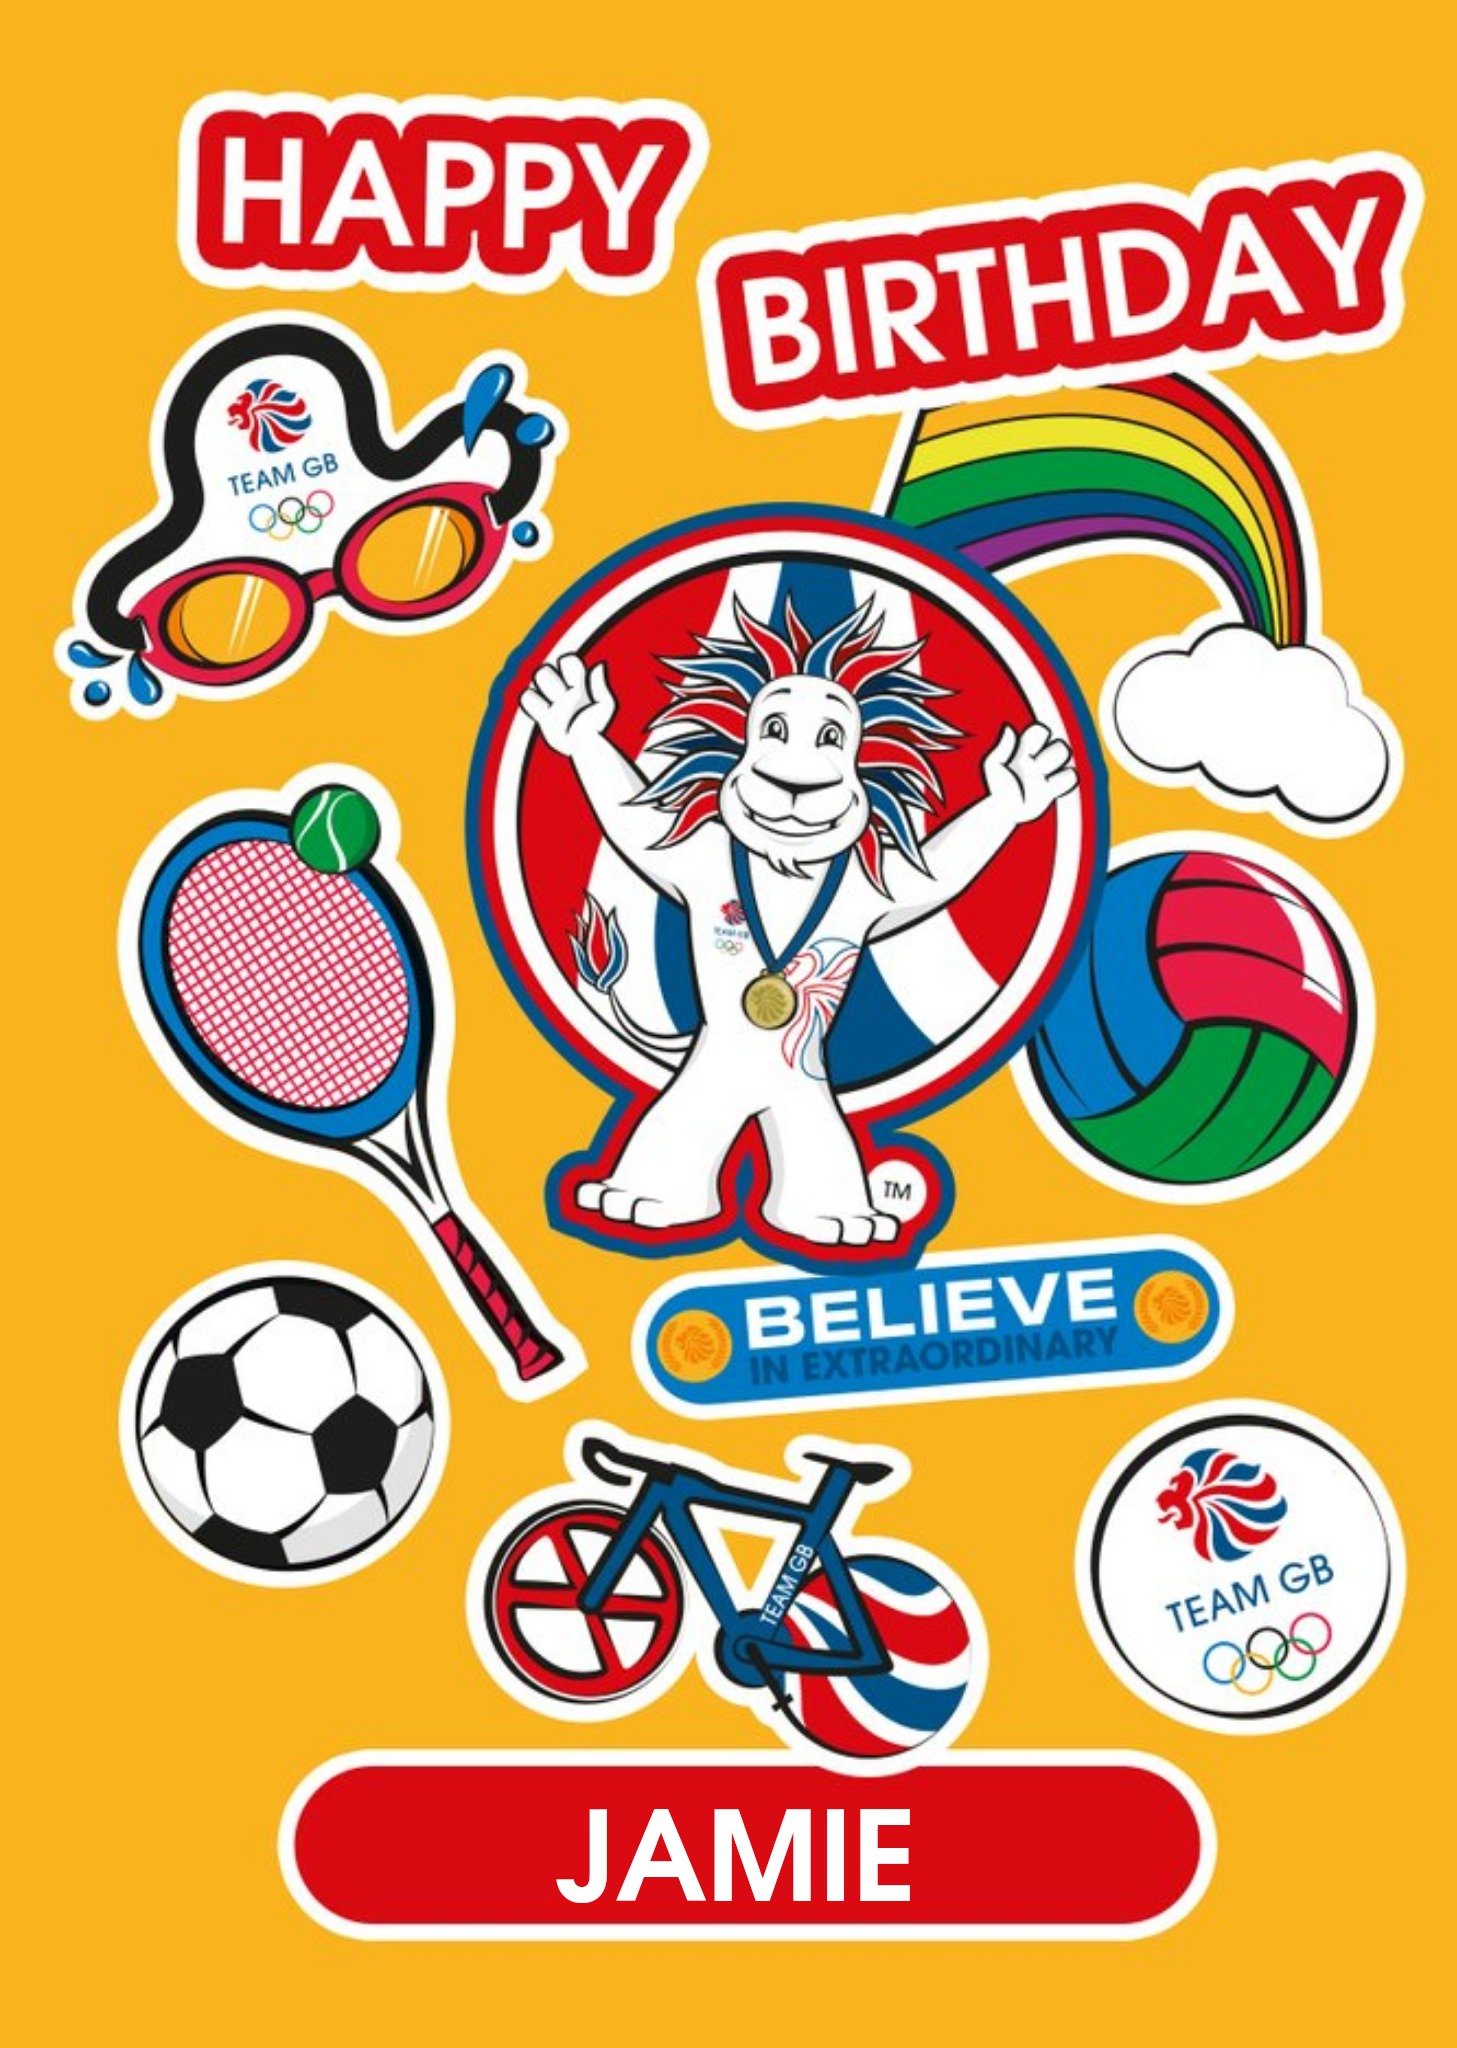 Moonpig Team Gb Happy Birthday Sporty Personalised Card, Large